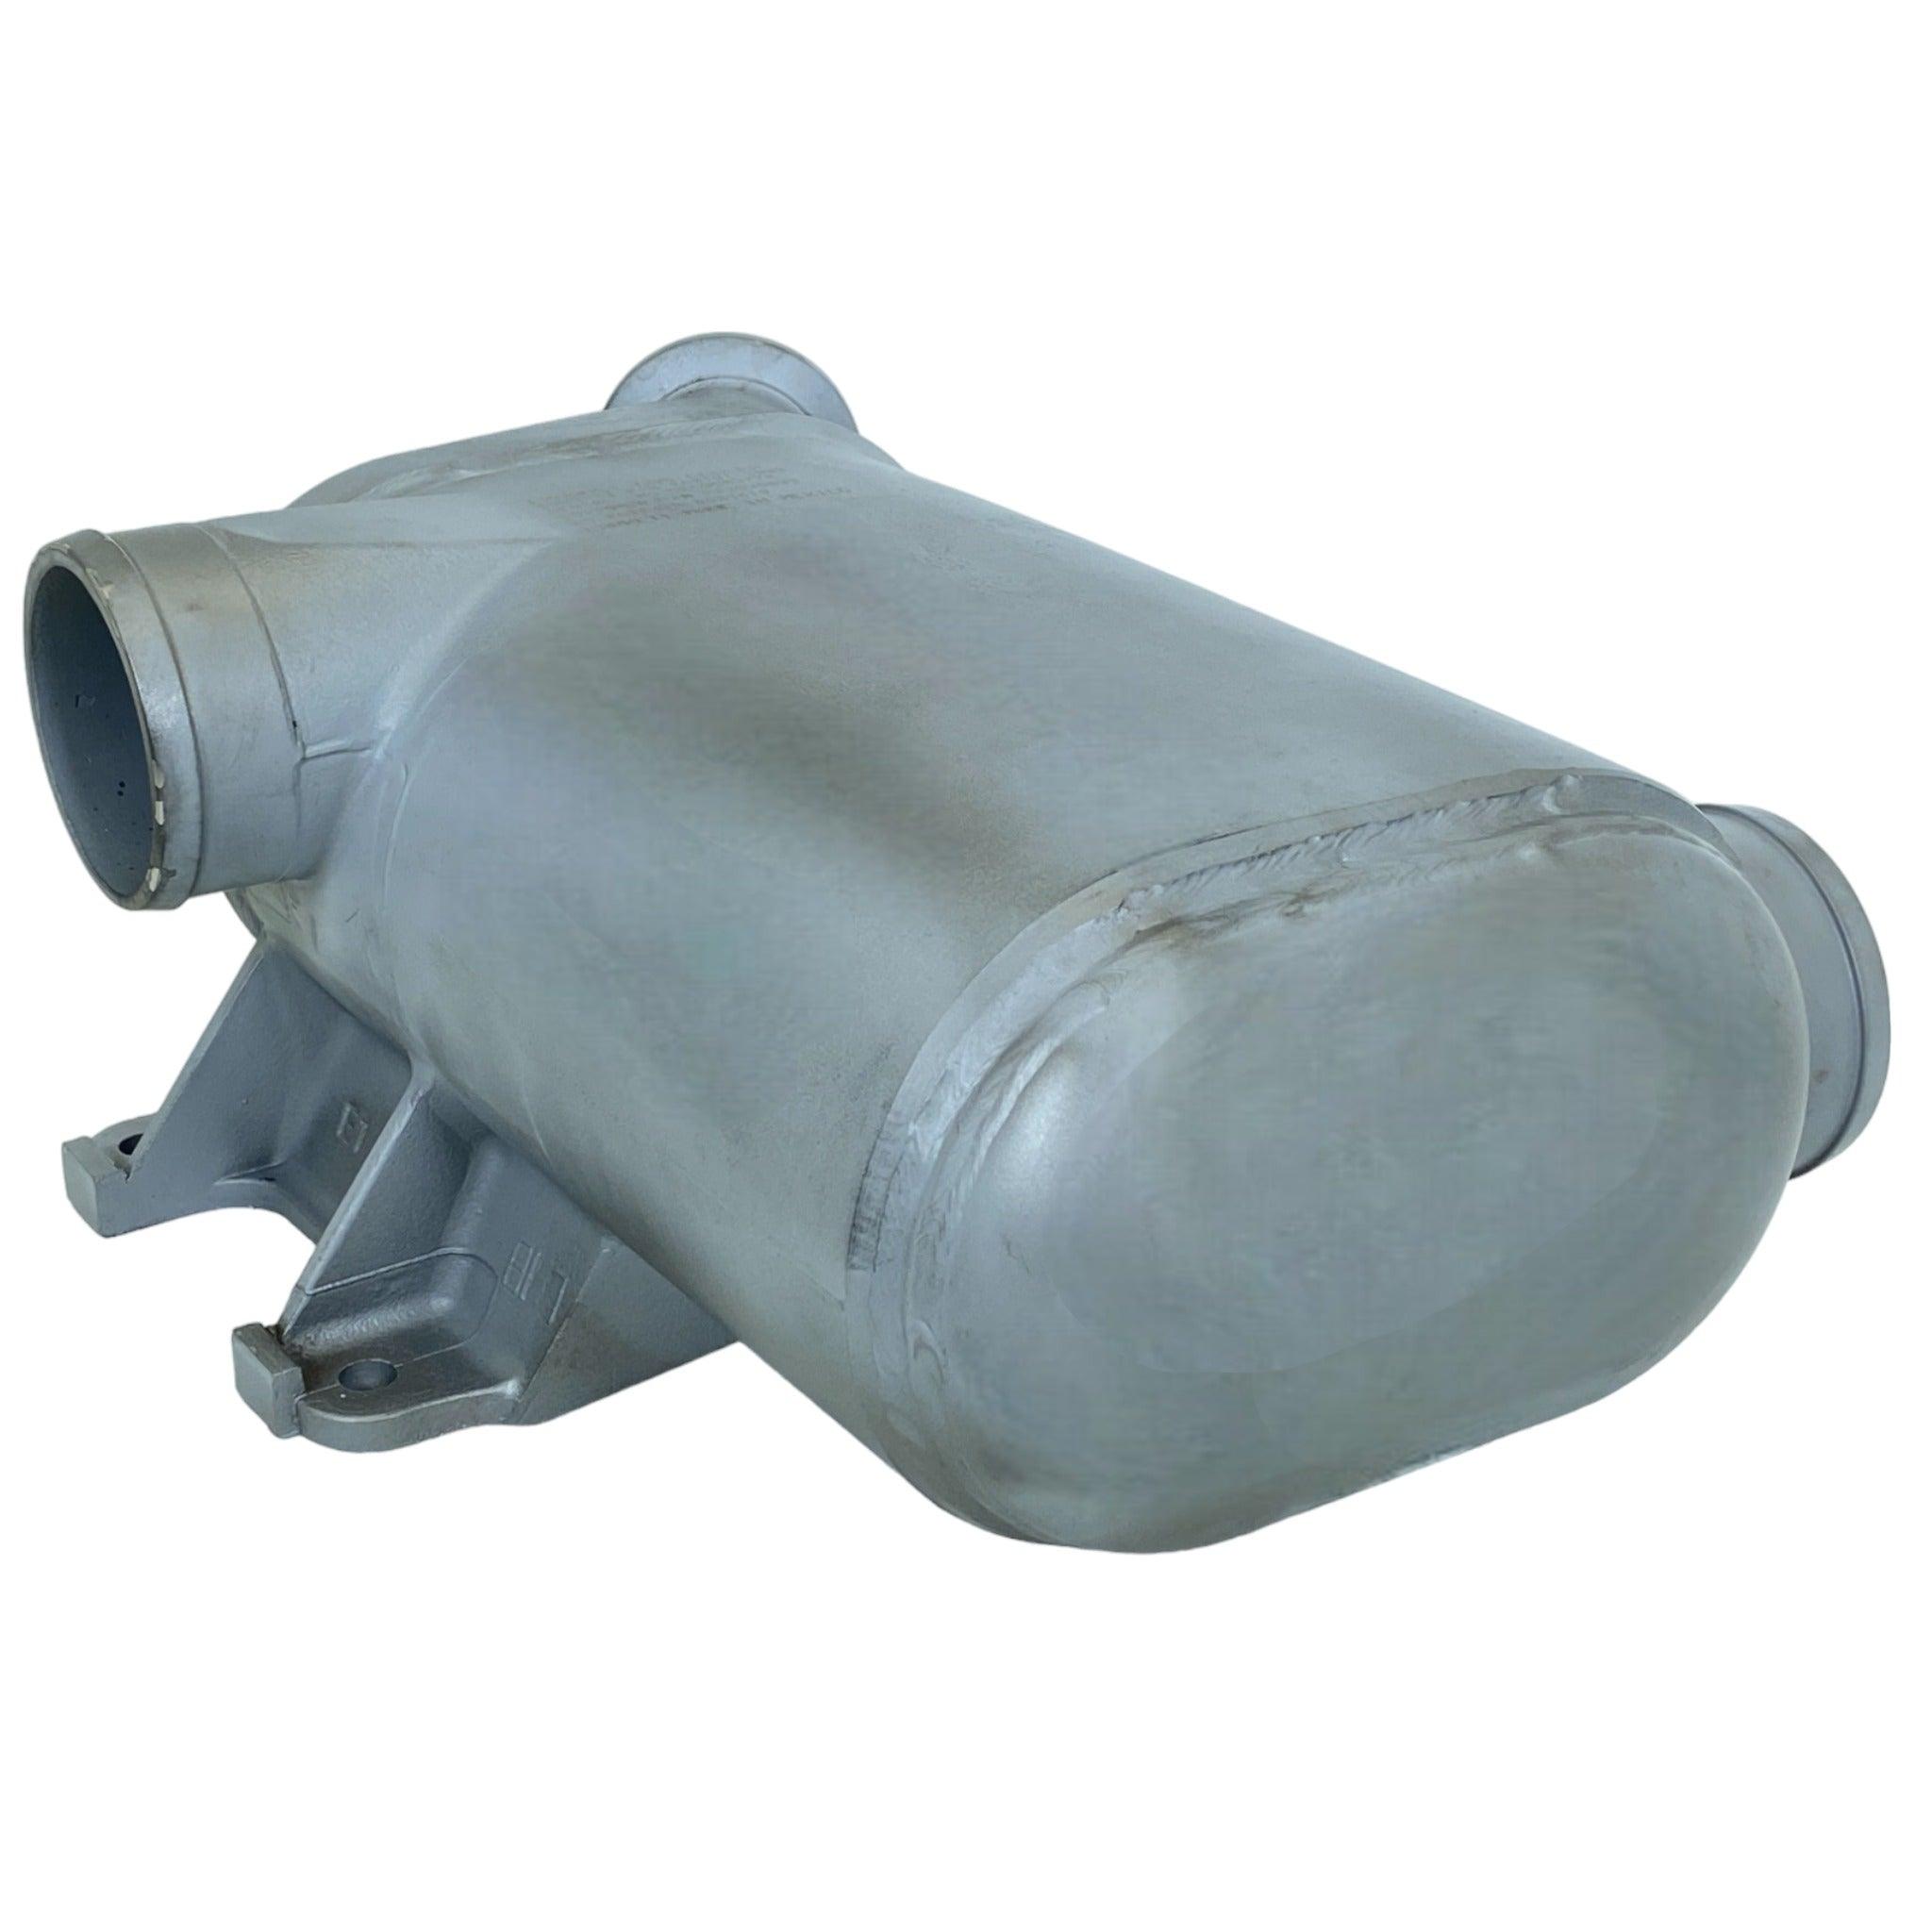 23538835 TamerX EGR Exhaust Gas Recirculation Cooler For Detroit Diesel - ADVANCED TRUCK PARTS